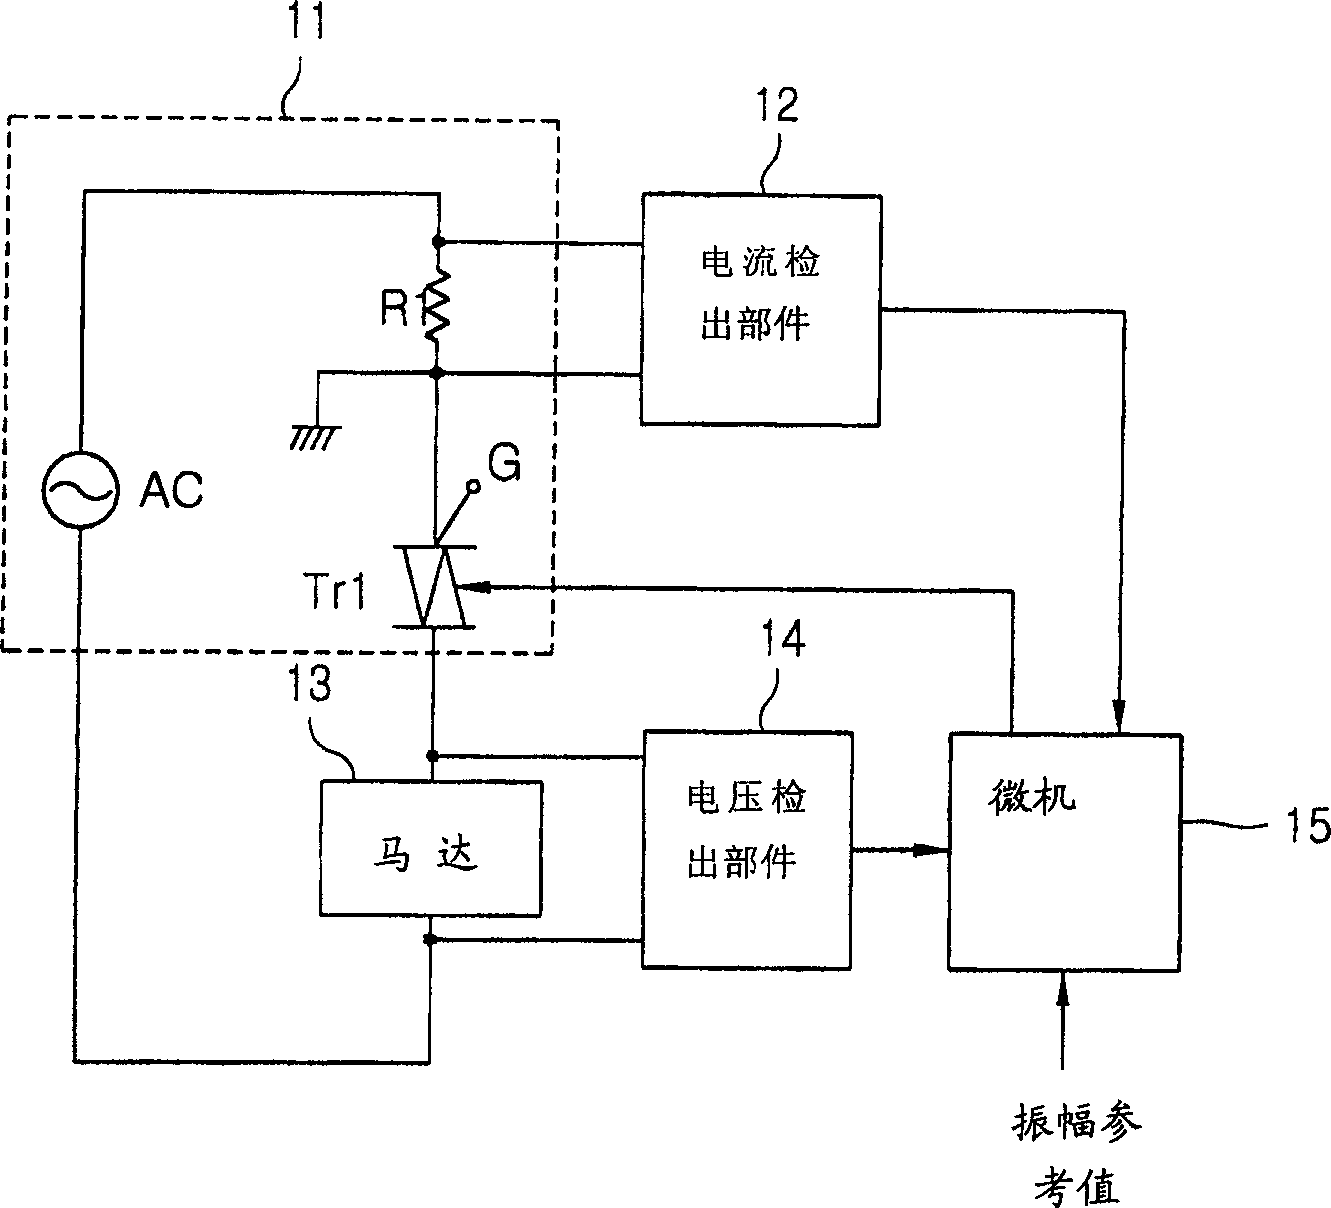 Amplitude control method for reciprocating compressor